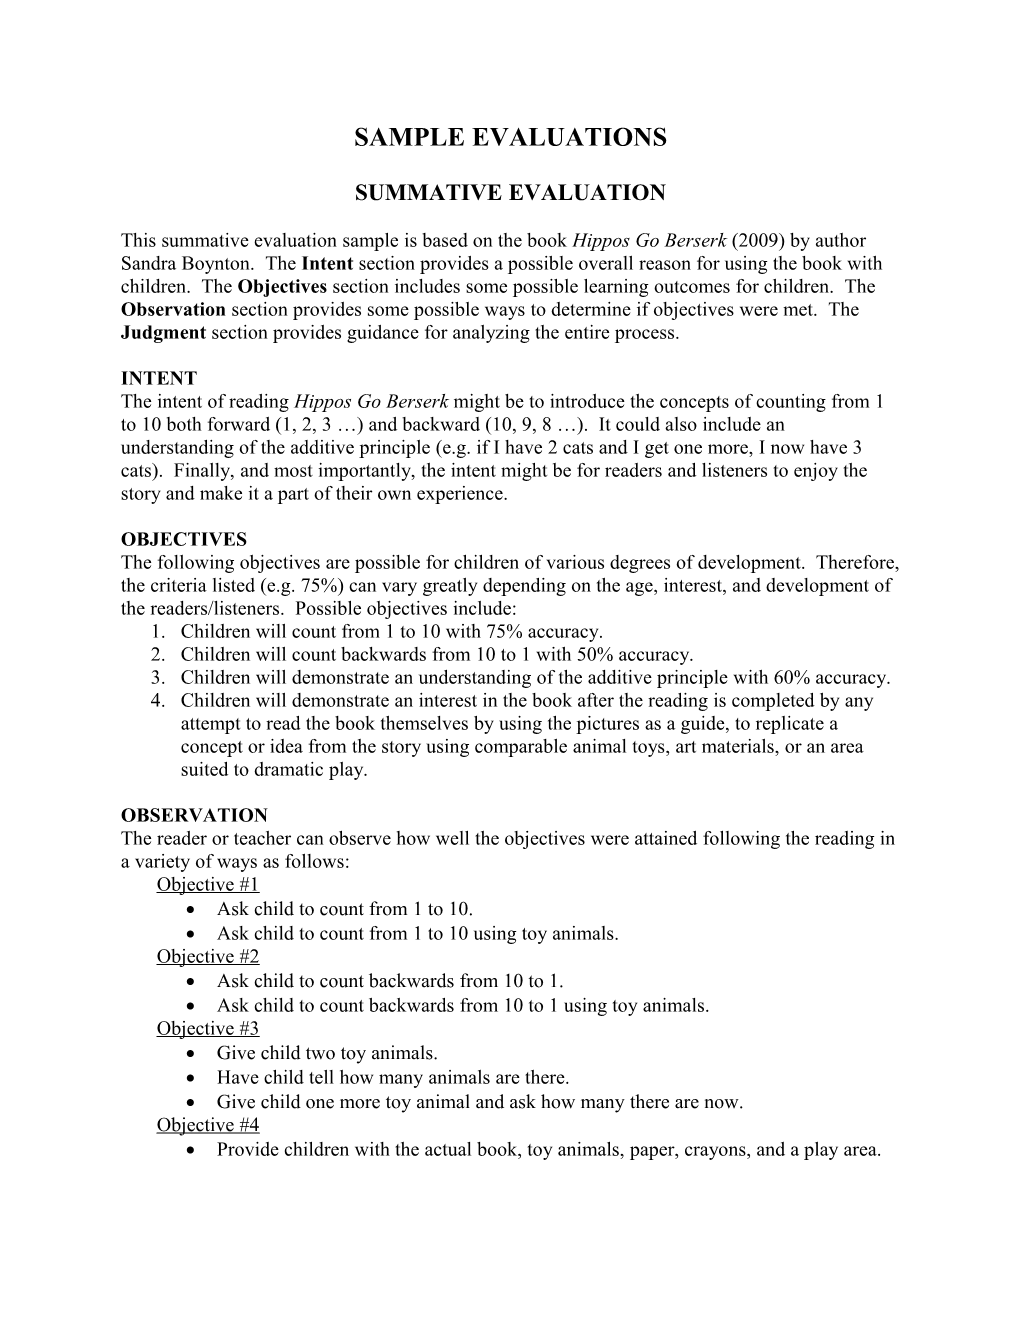 H1 Sample Summative Evaluation